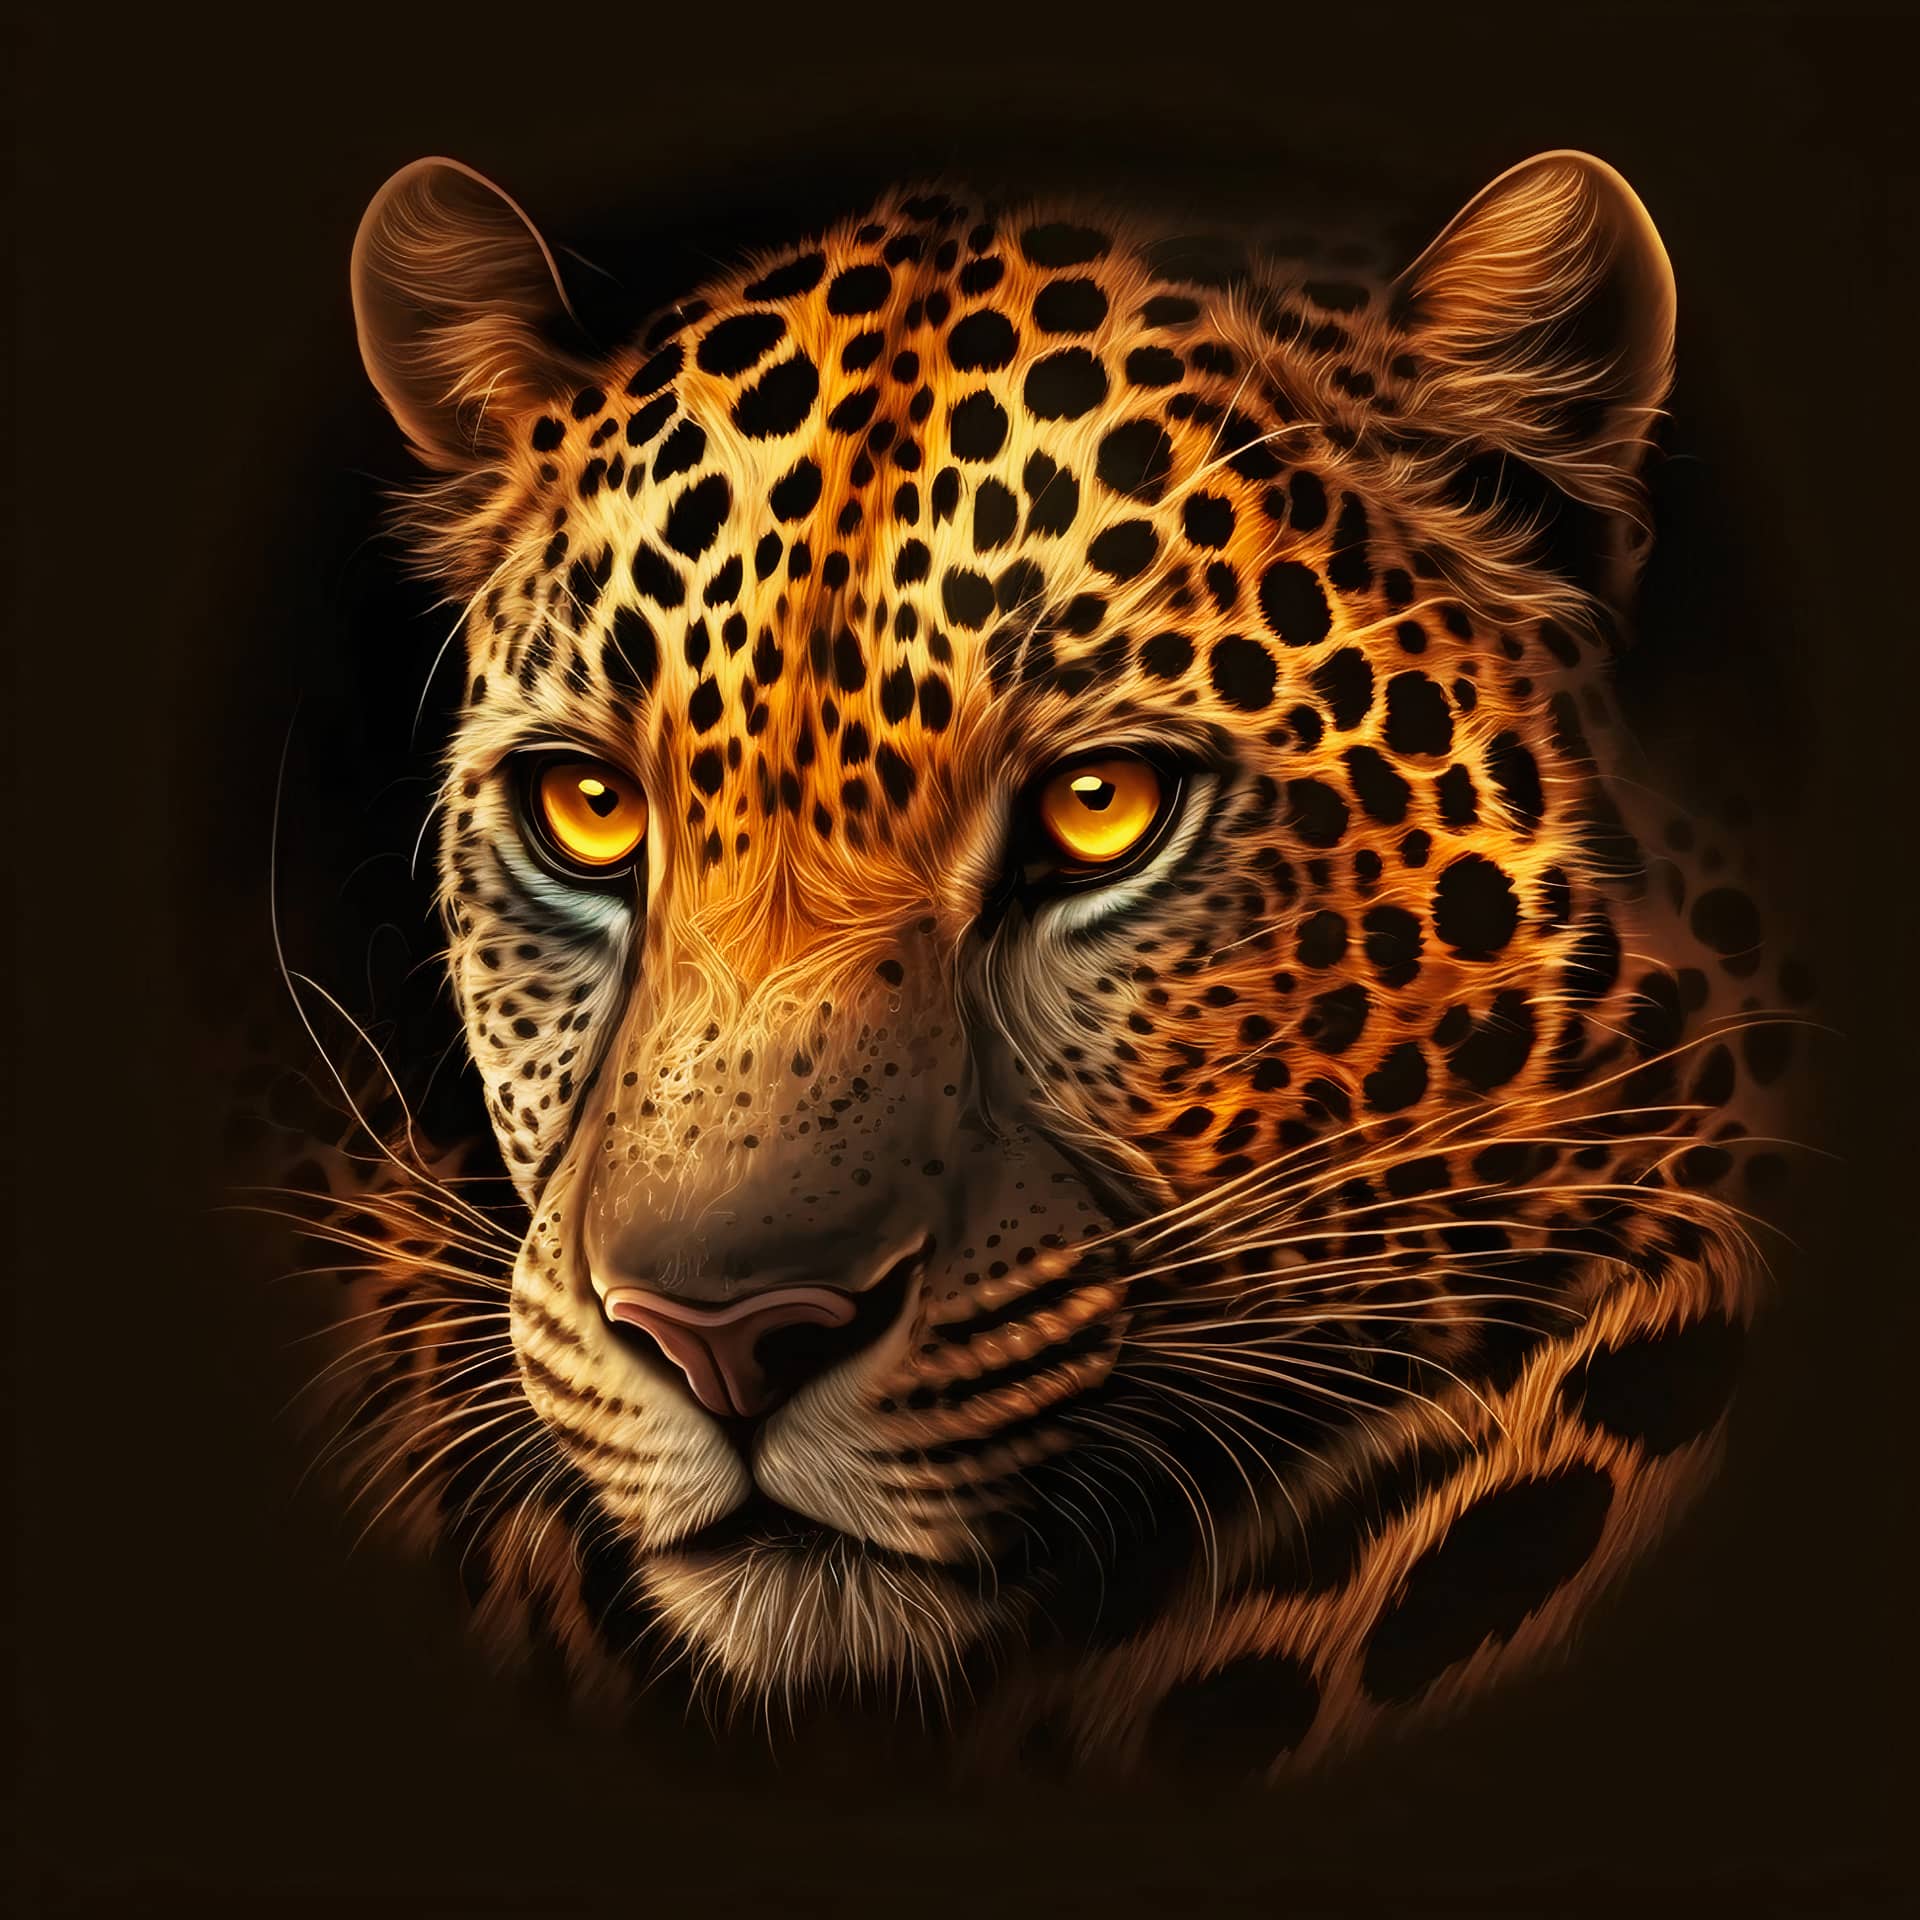 Jaguar illustration nice image